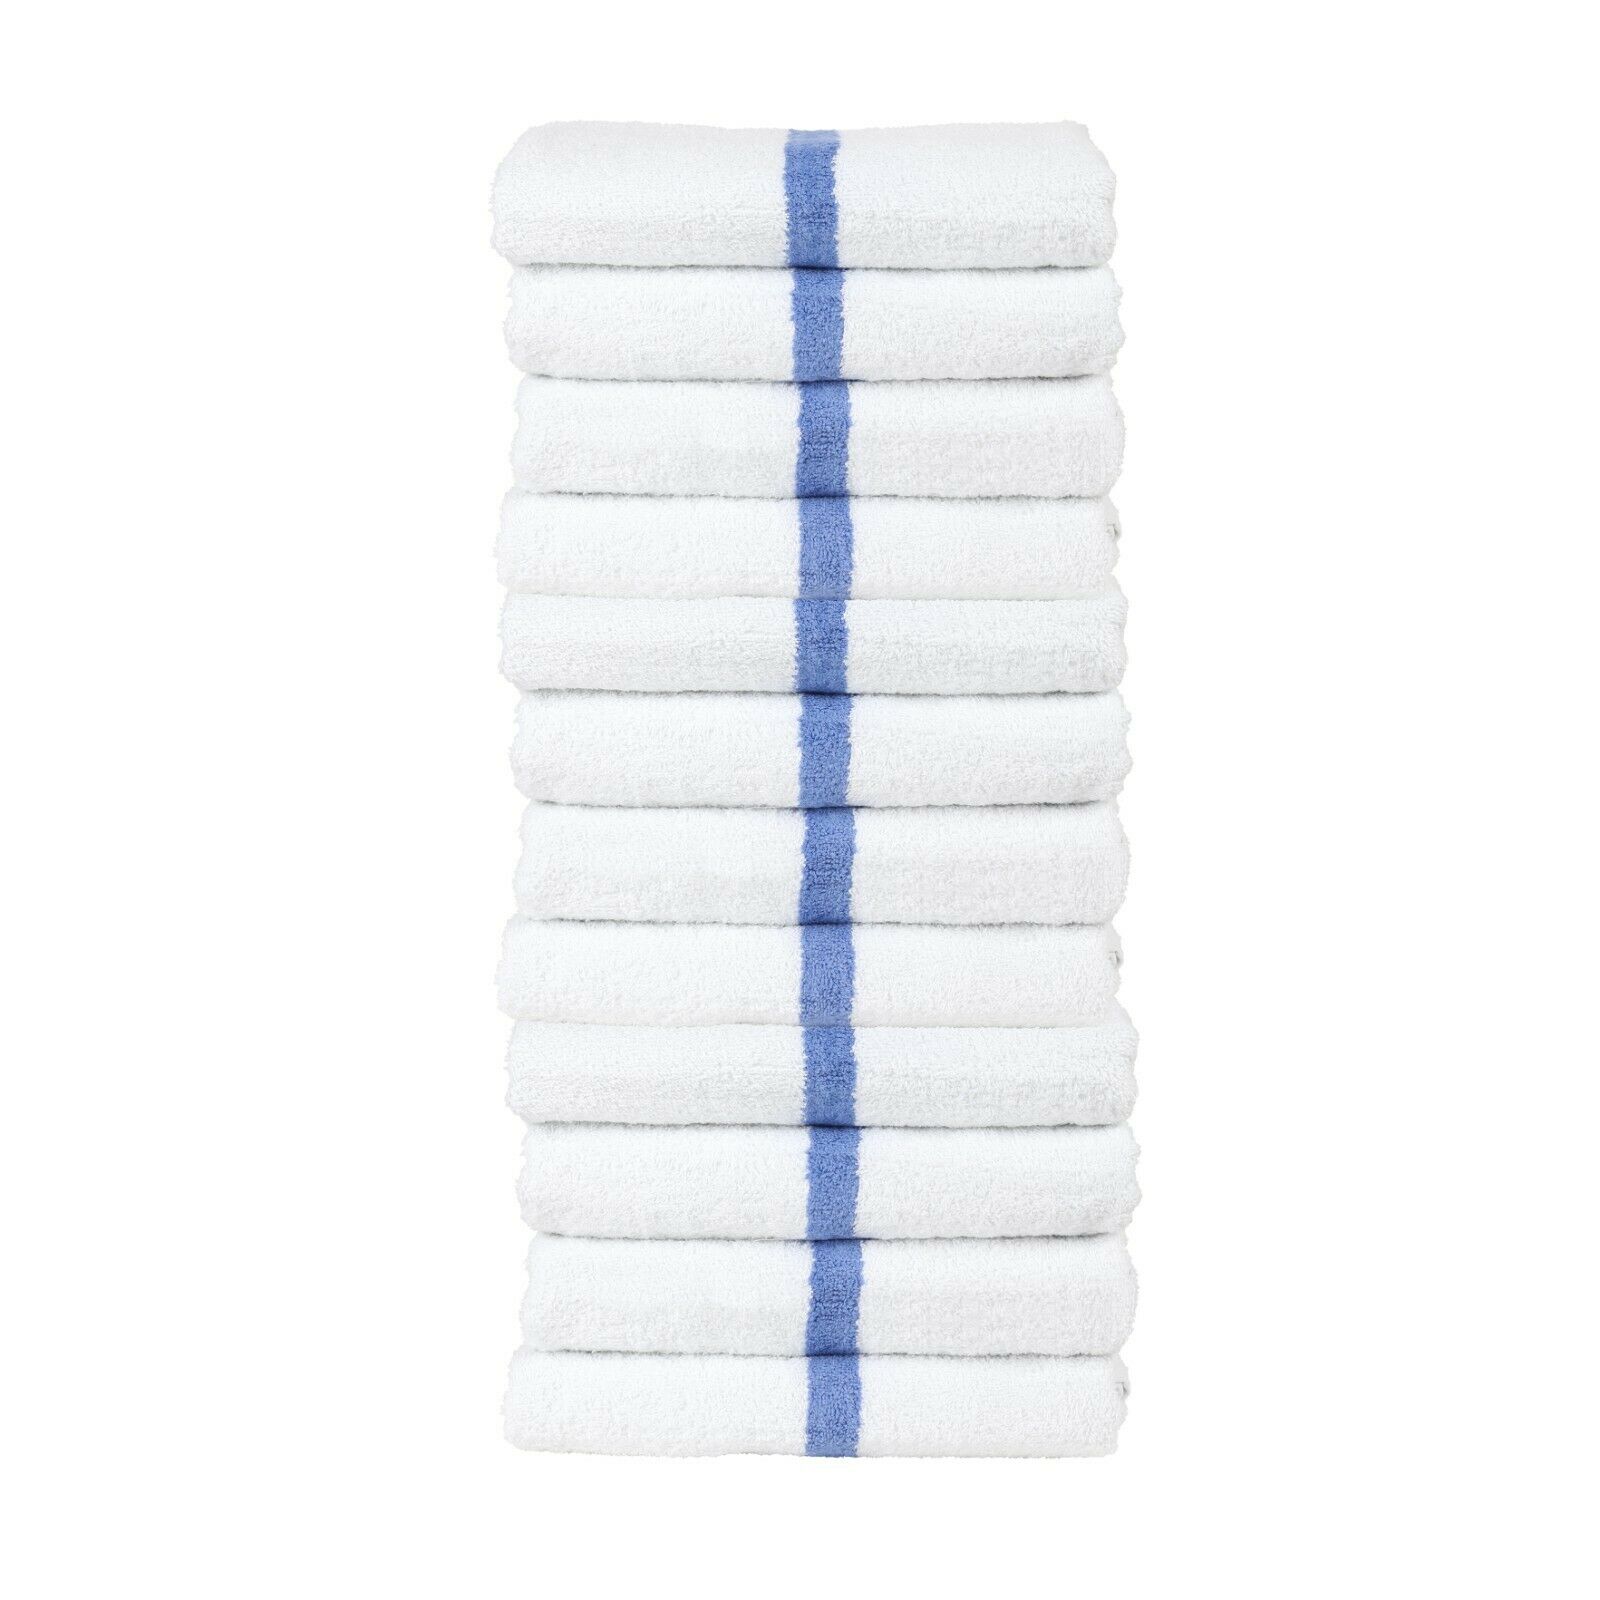 Striped Cotton Pool Towels - Bulk Value 12 Pack - 22 X 44 - White W/ Blue Stripe